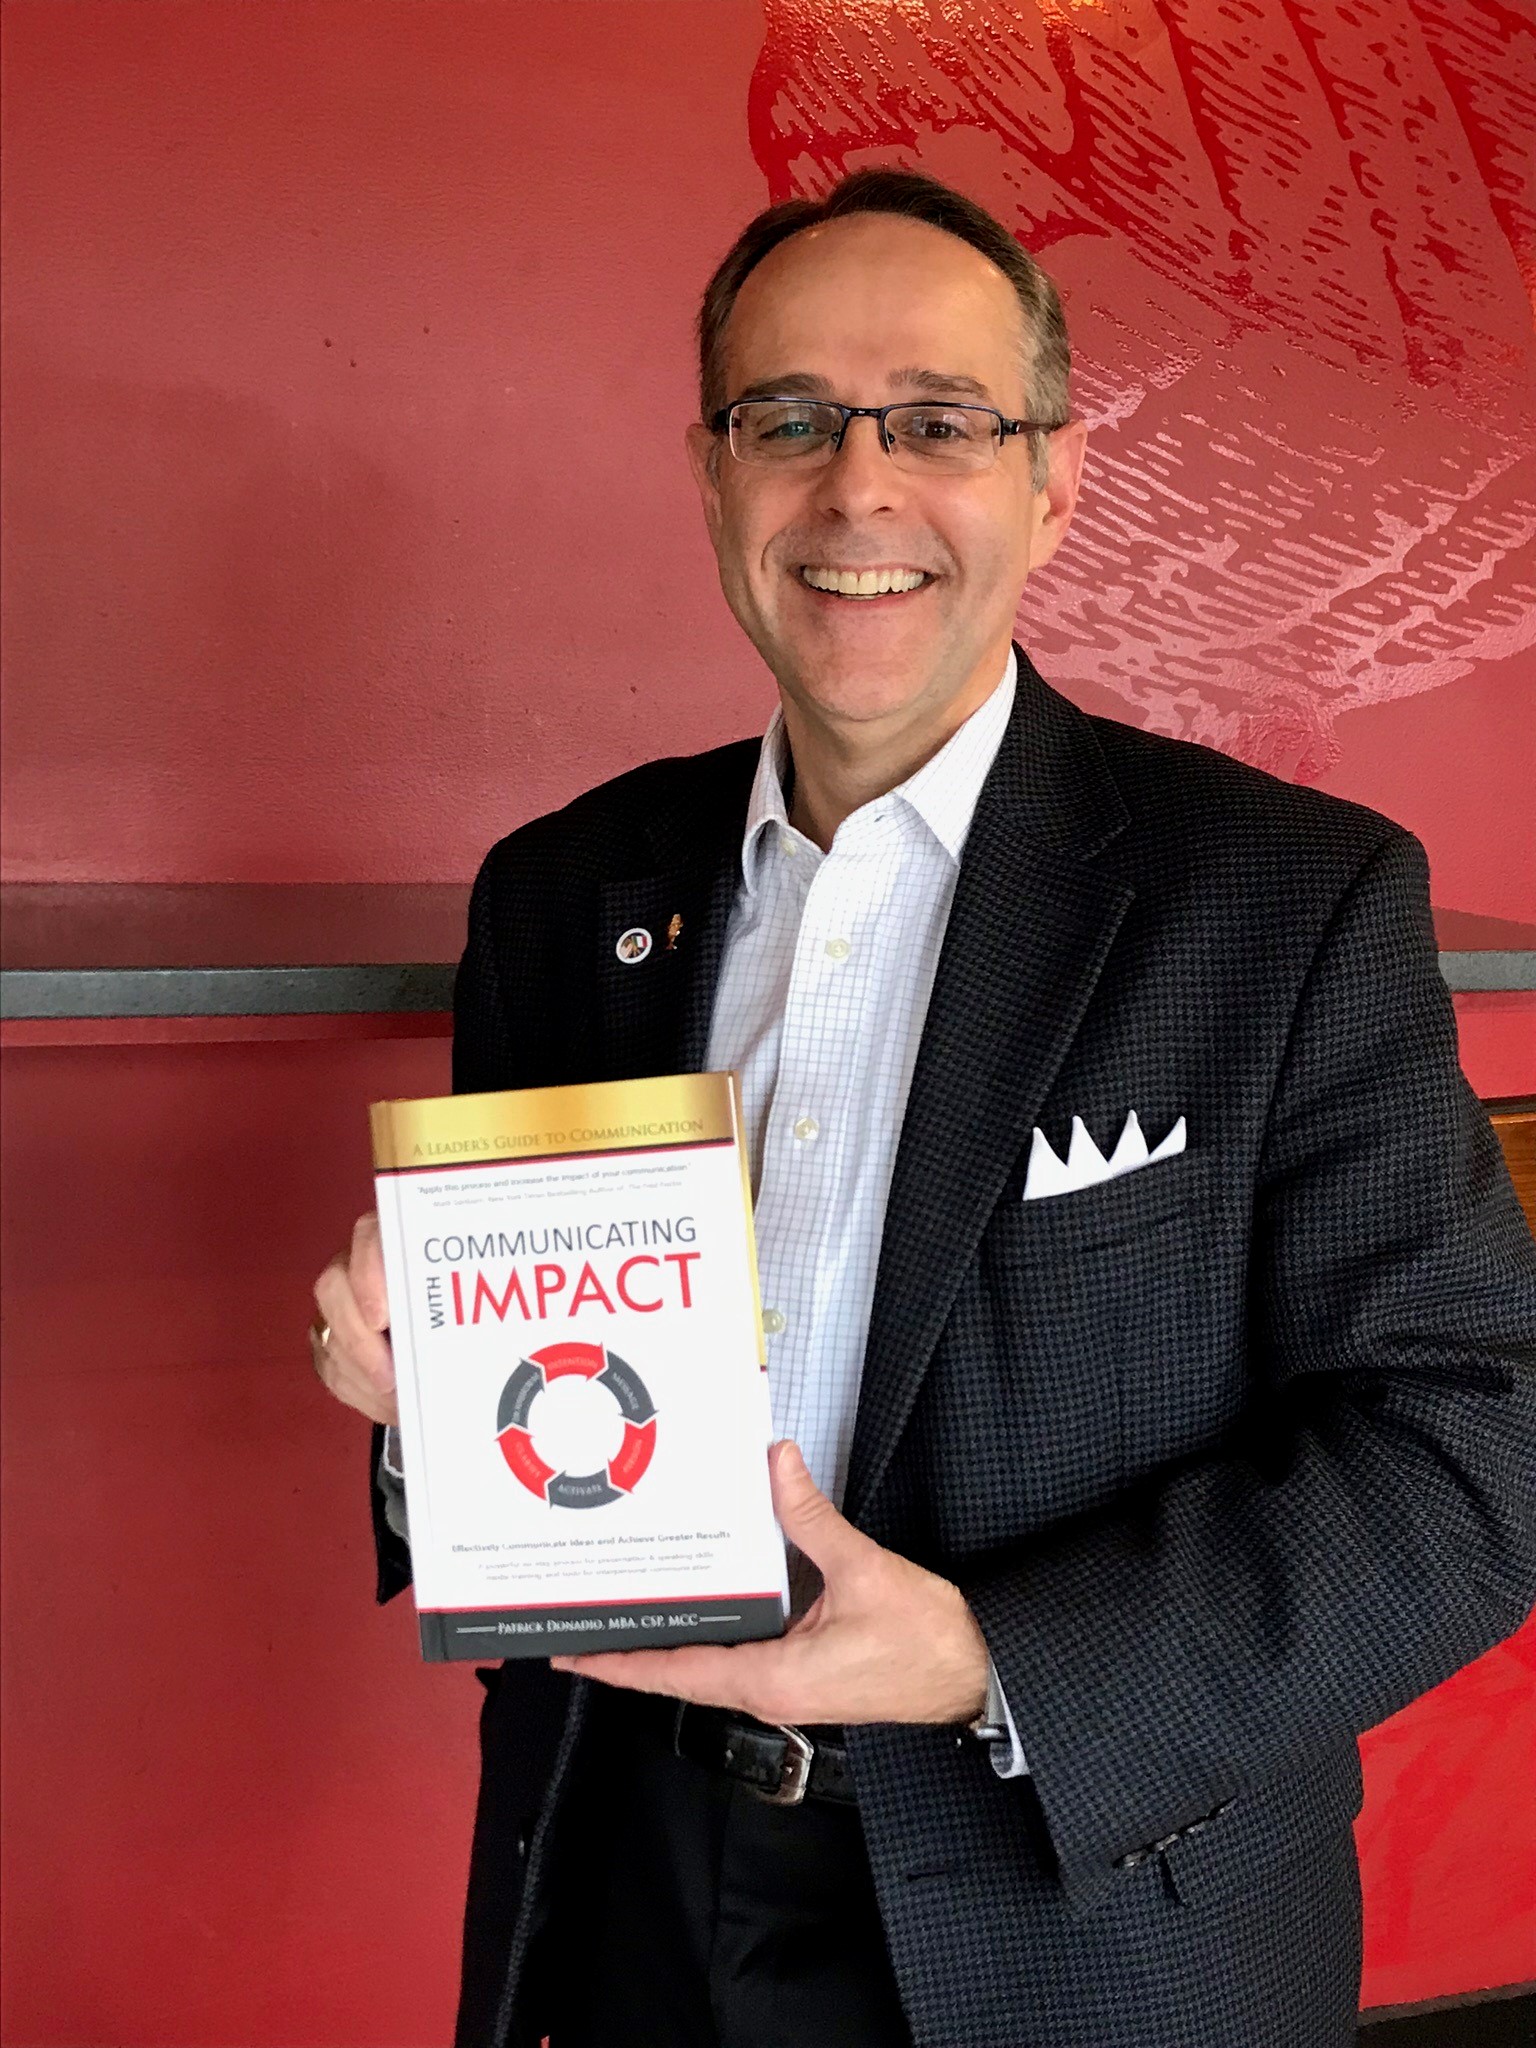 Communicating with IMPACT book author Patrick Donadio